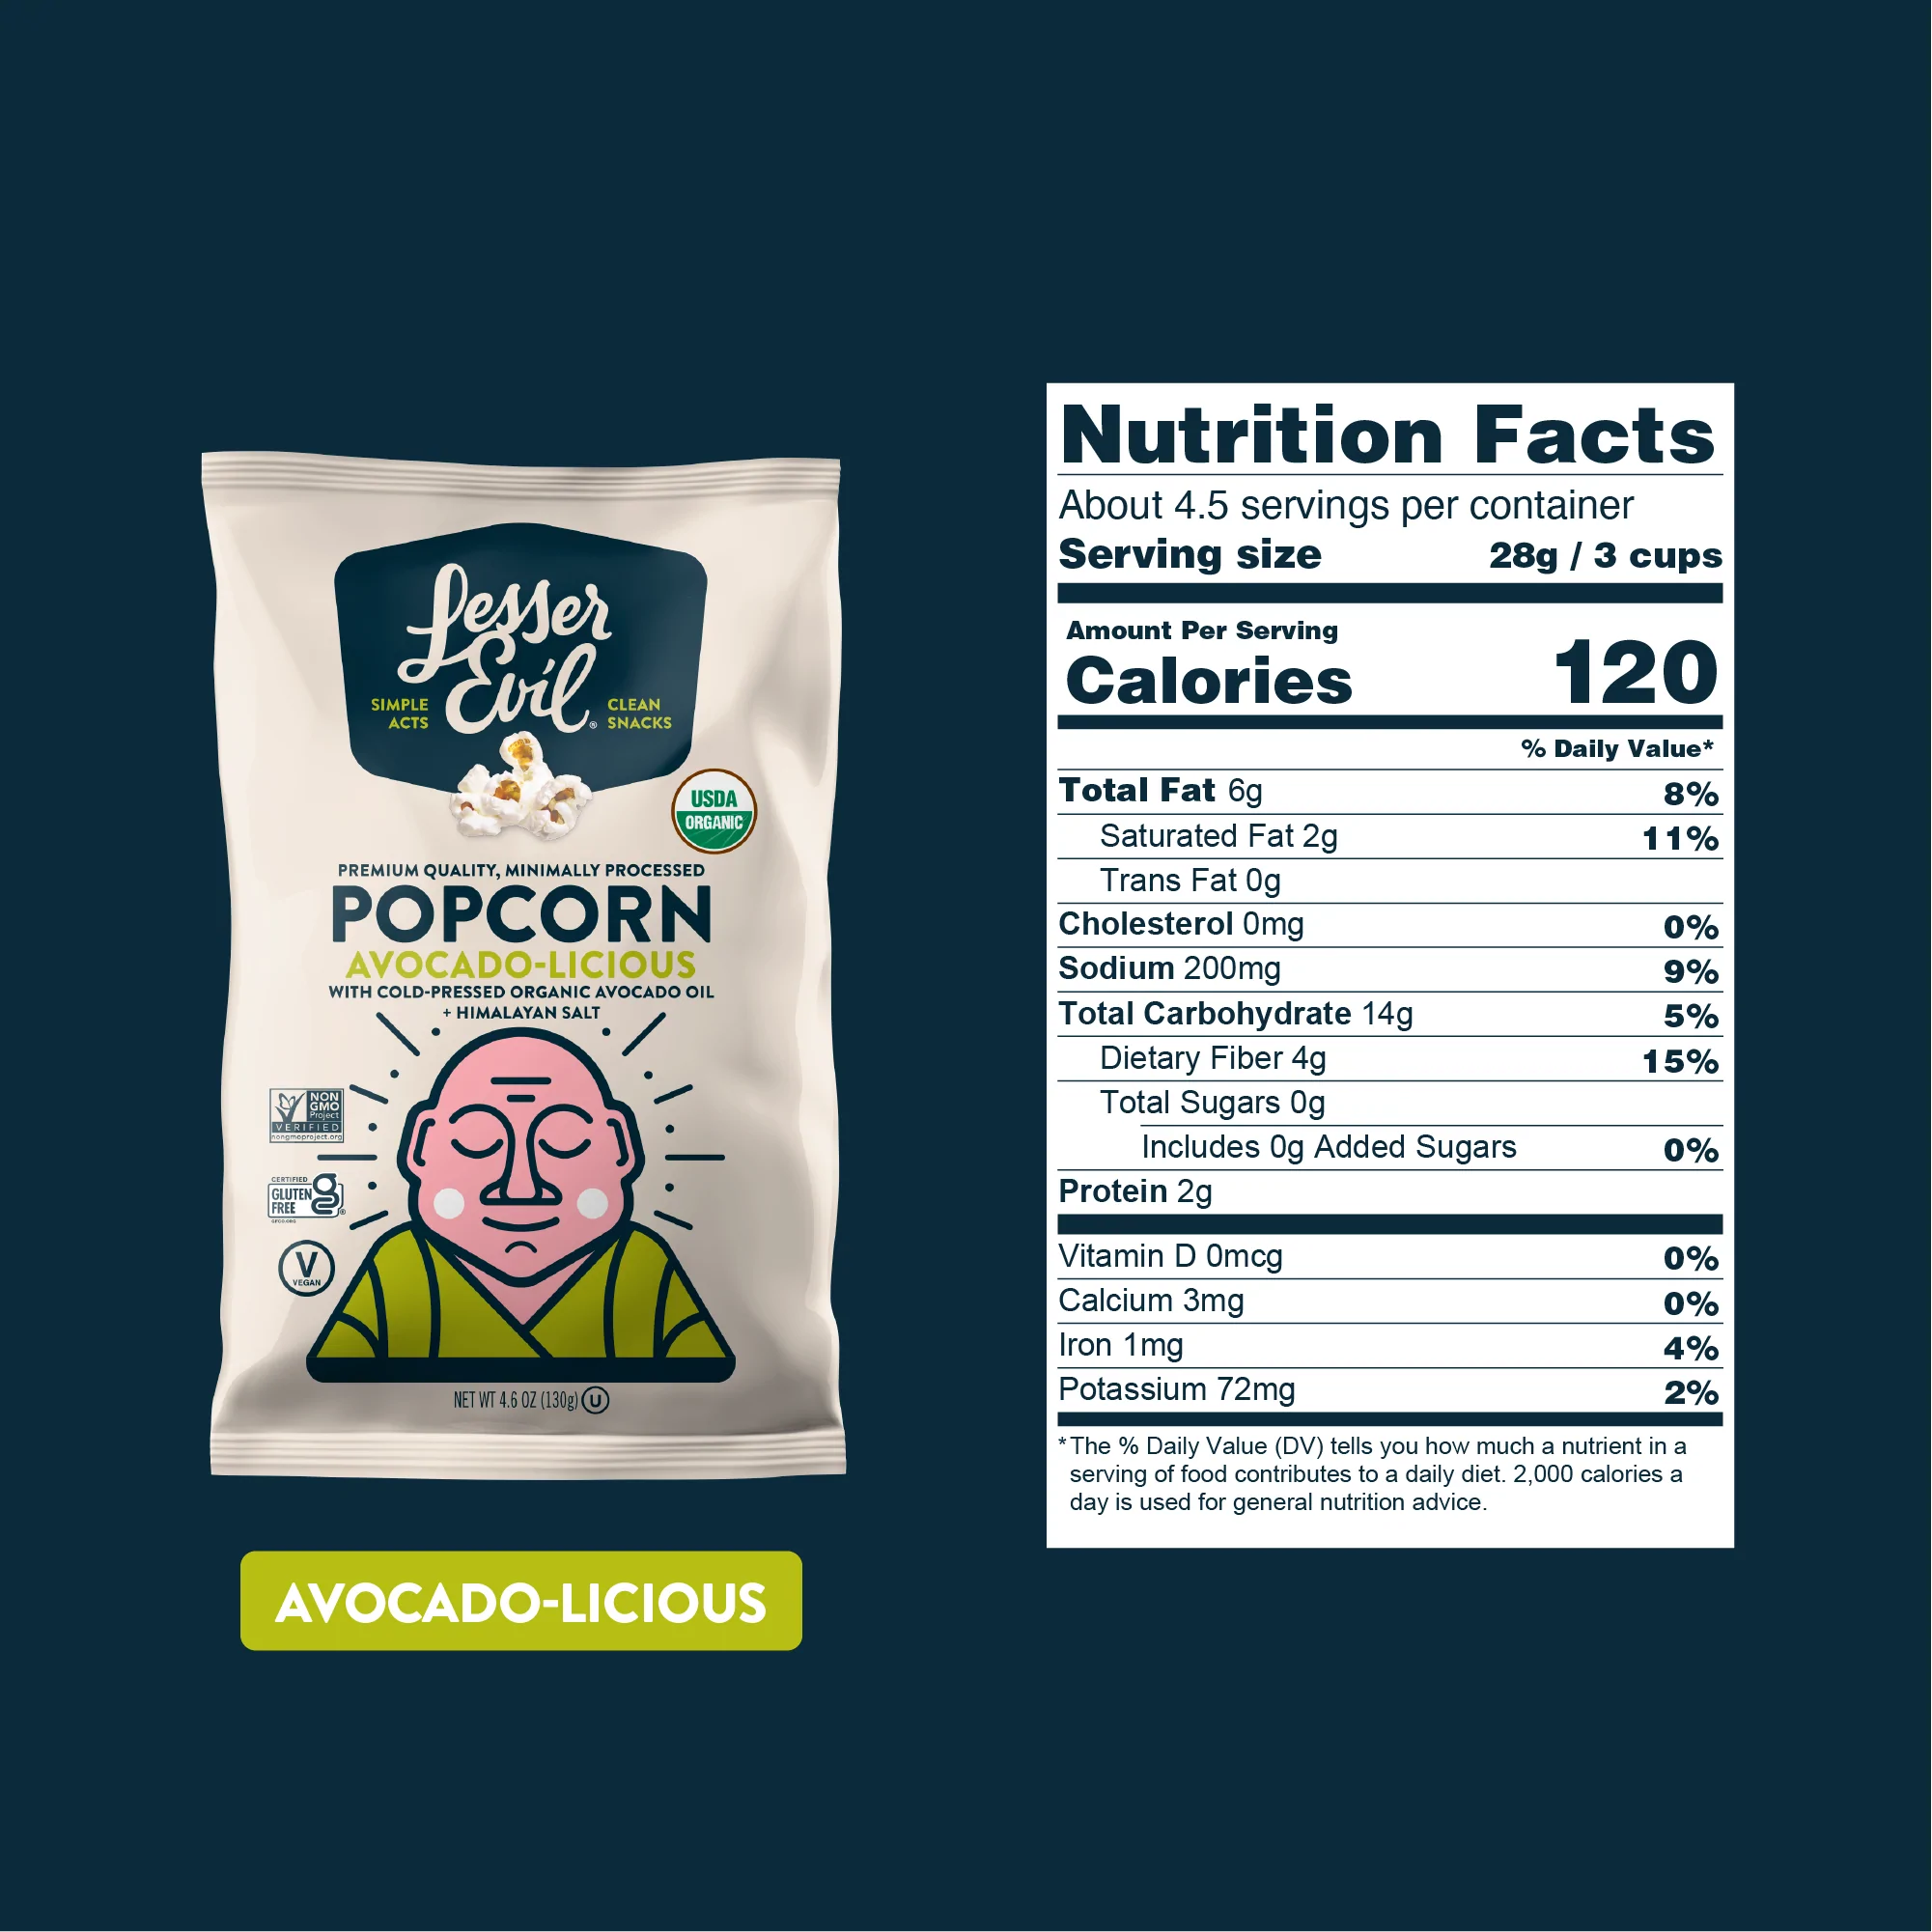 LesserEvil, Organic Popcorn Avocadolicious 12 units per case 4.6 oz